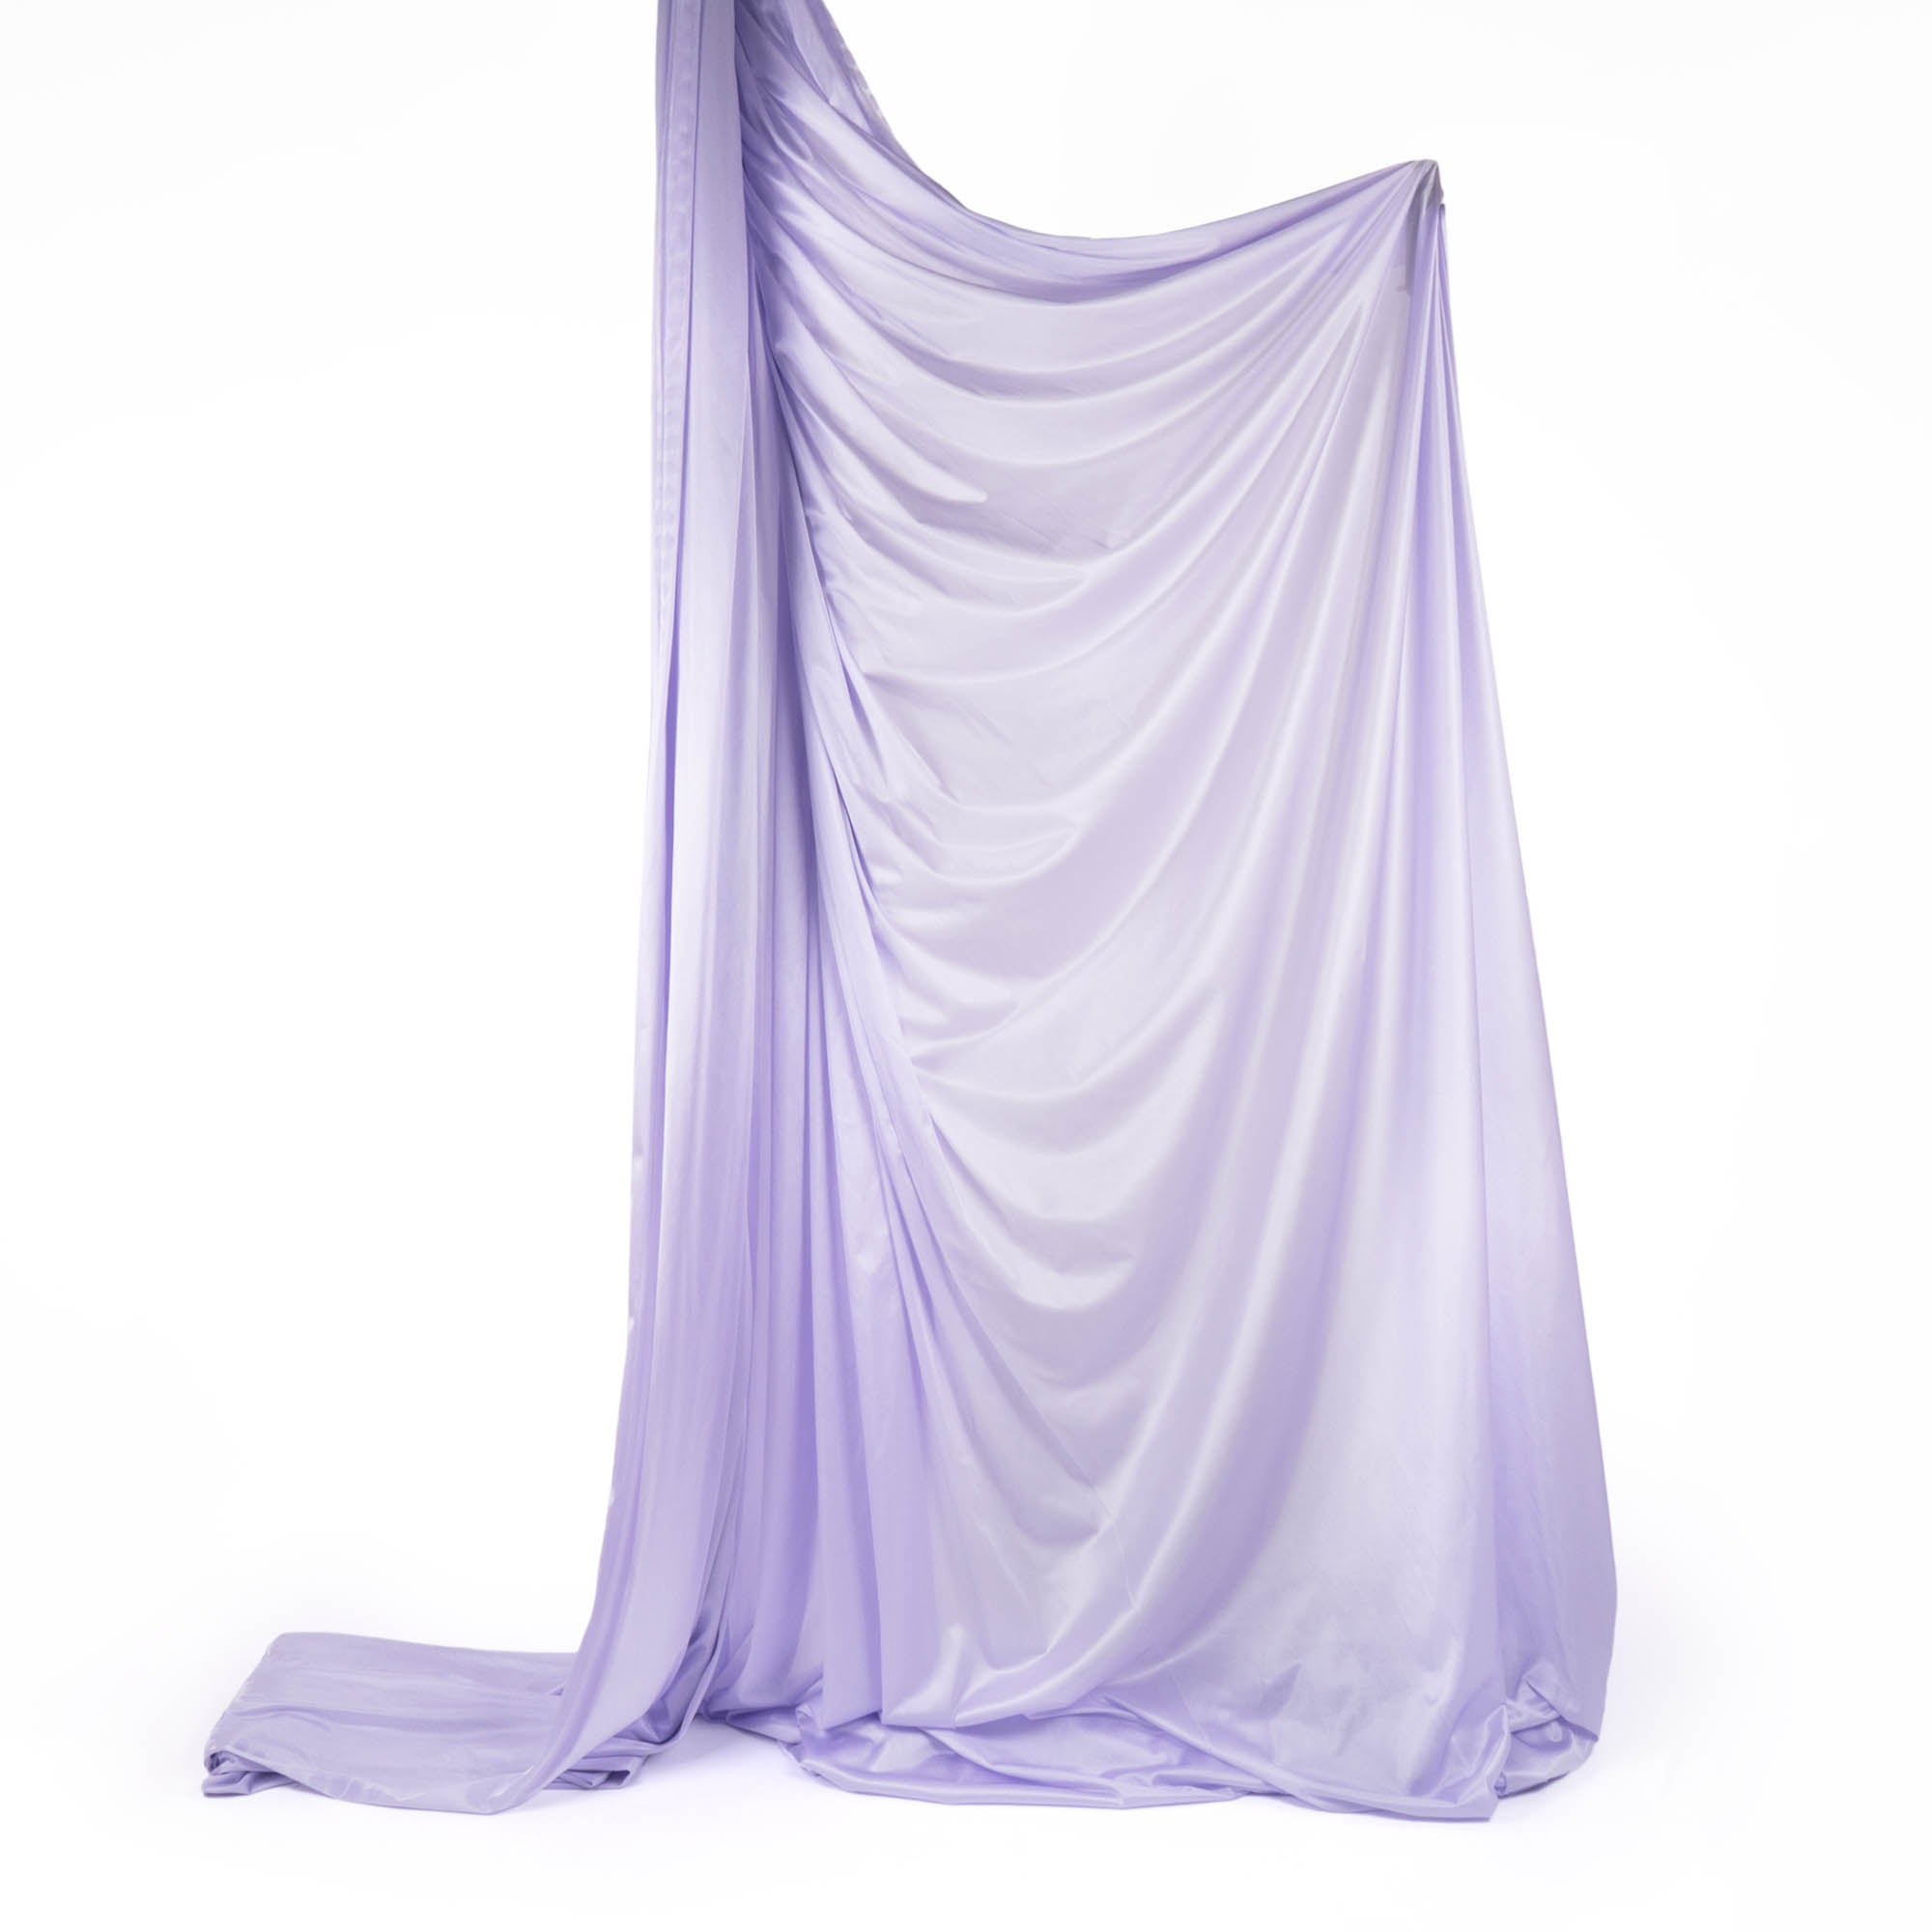 Lilac rigged silk